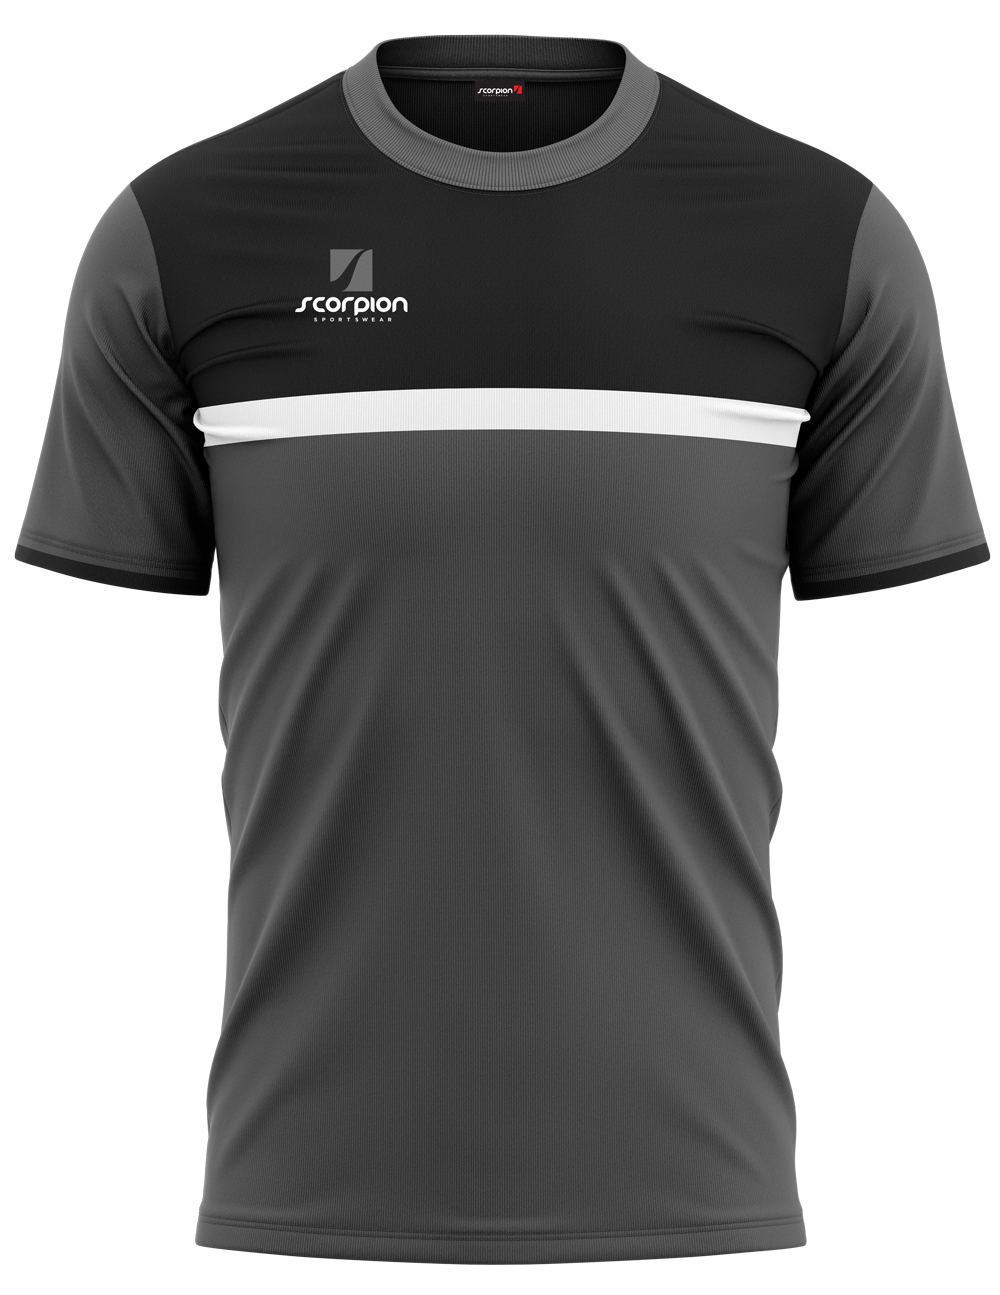 Scorpion Training T-Shirts - Charcoal/Black/White